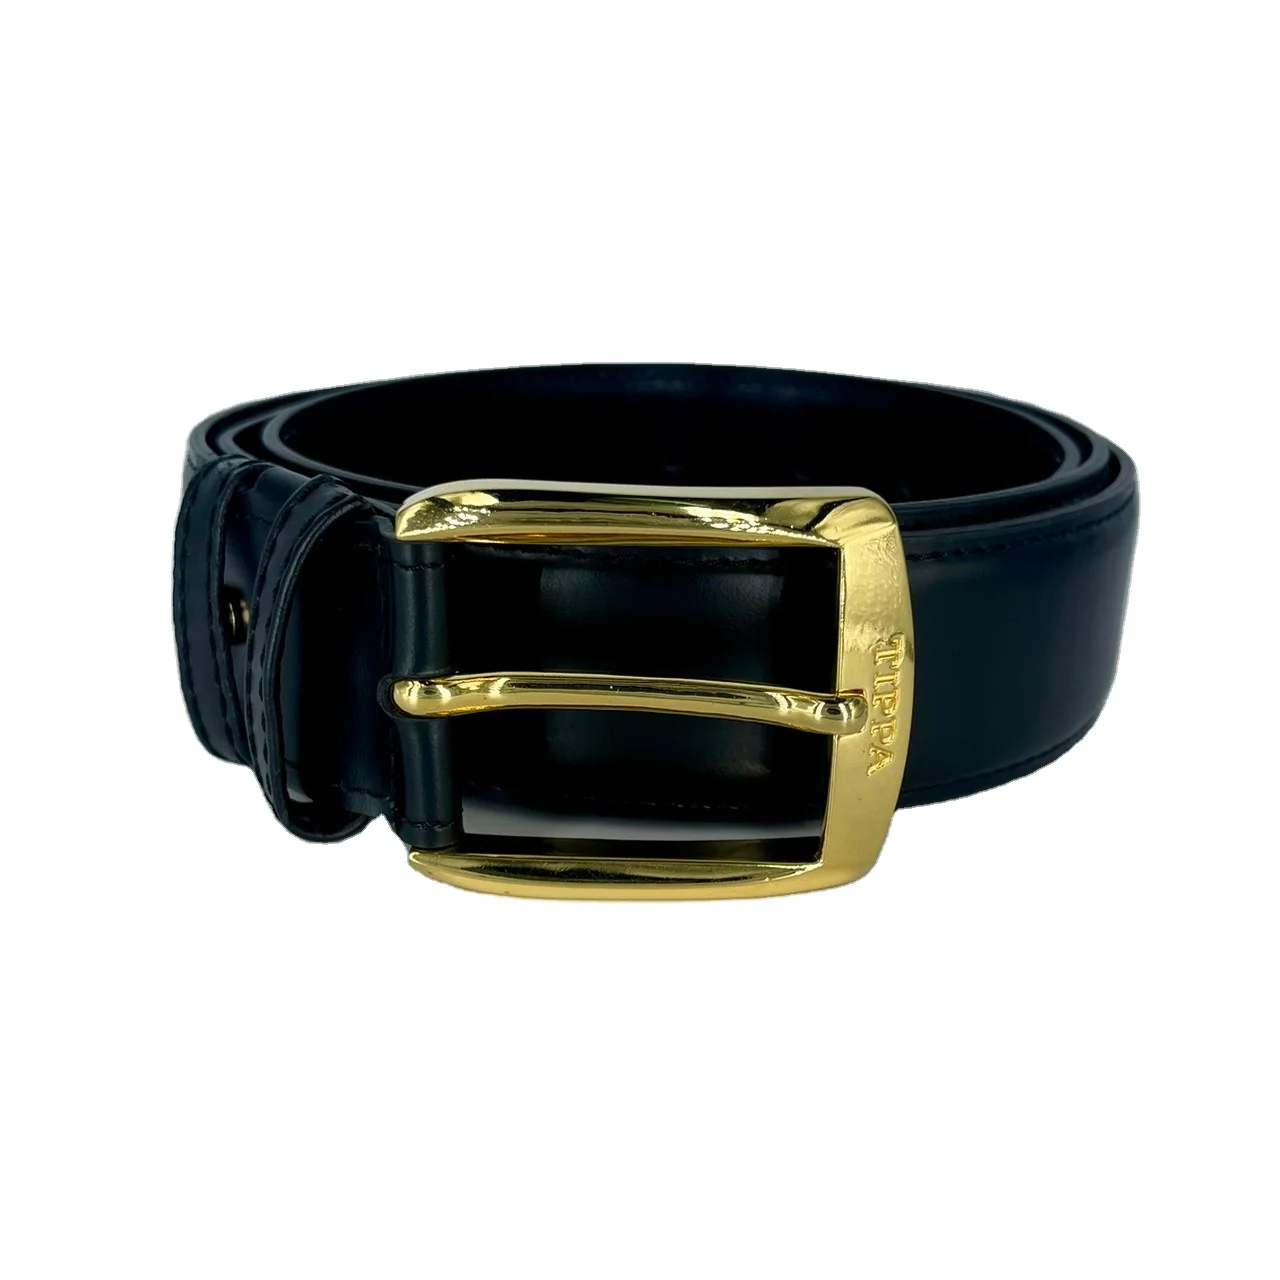 Belt Accessories From Thailand Luxury Buckle Premium Brand - Buy Custom ...